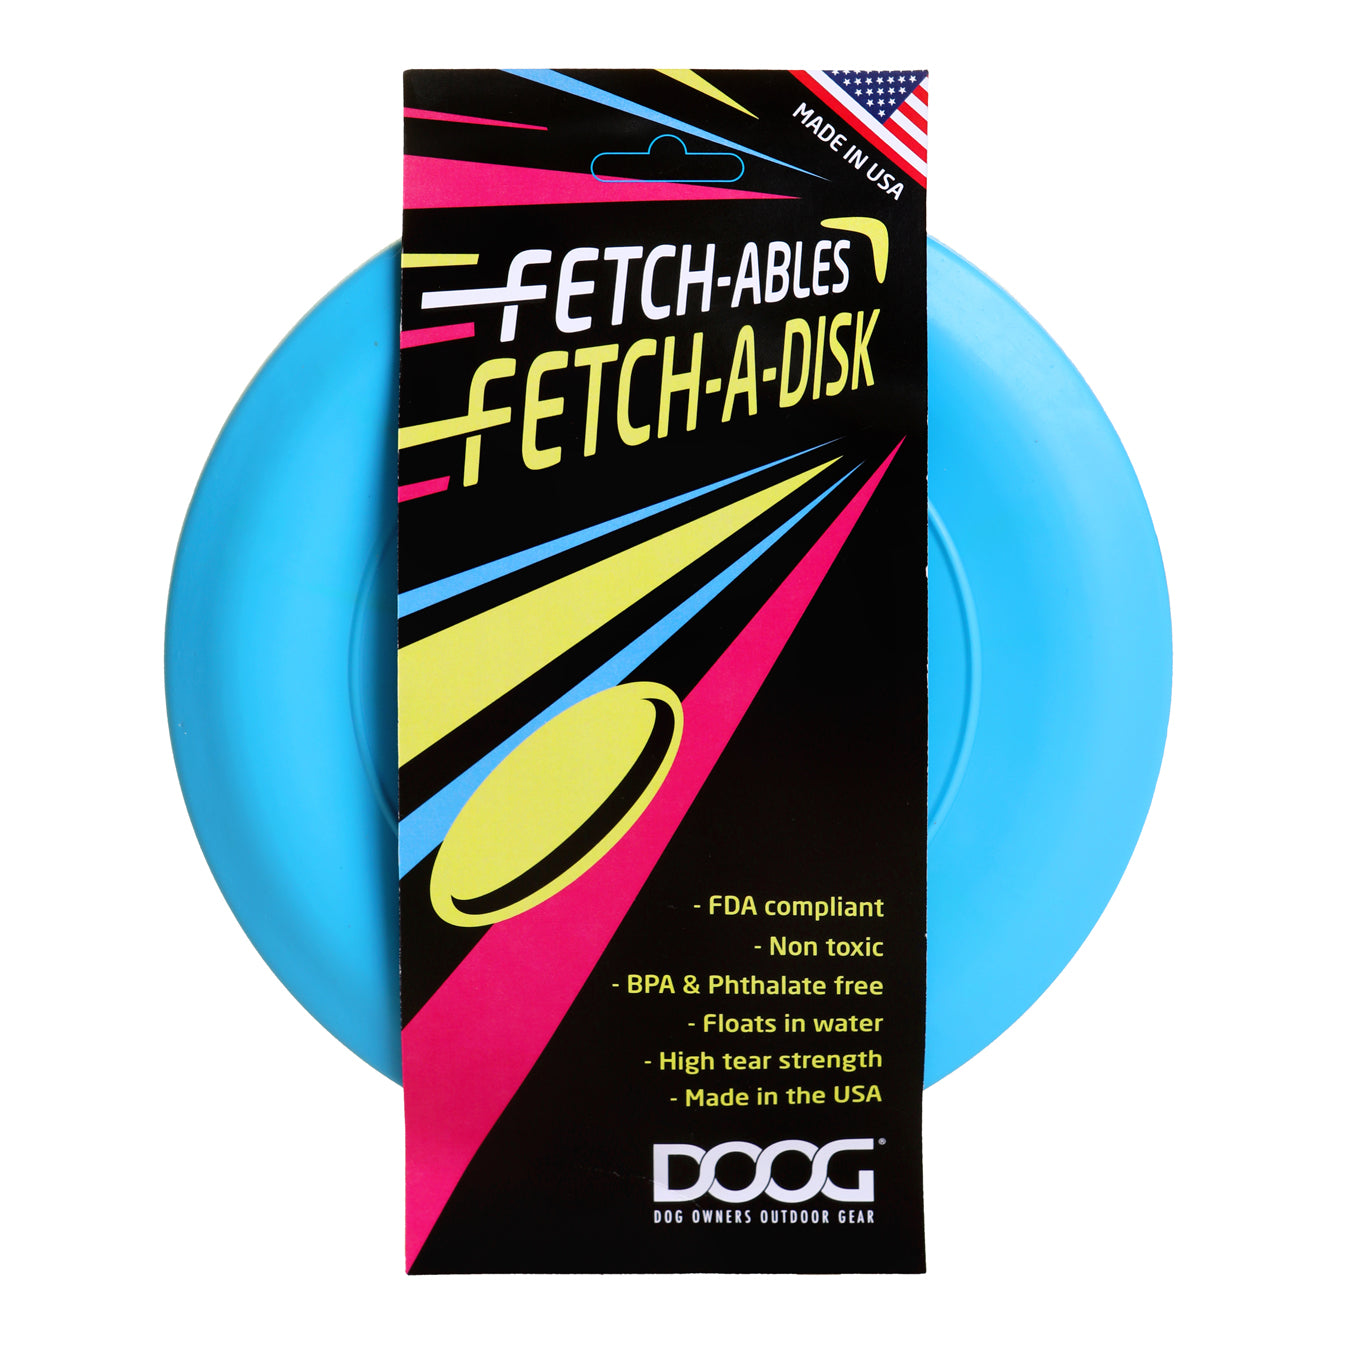 Fetchables - Fetch-A-Disk